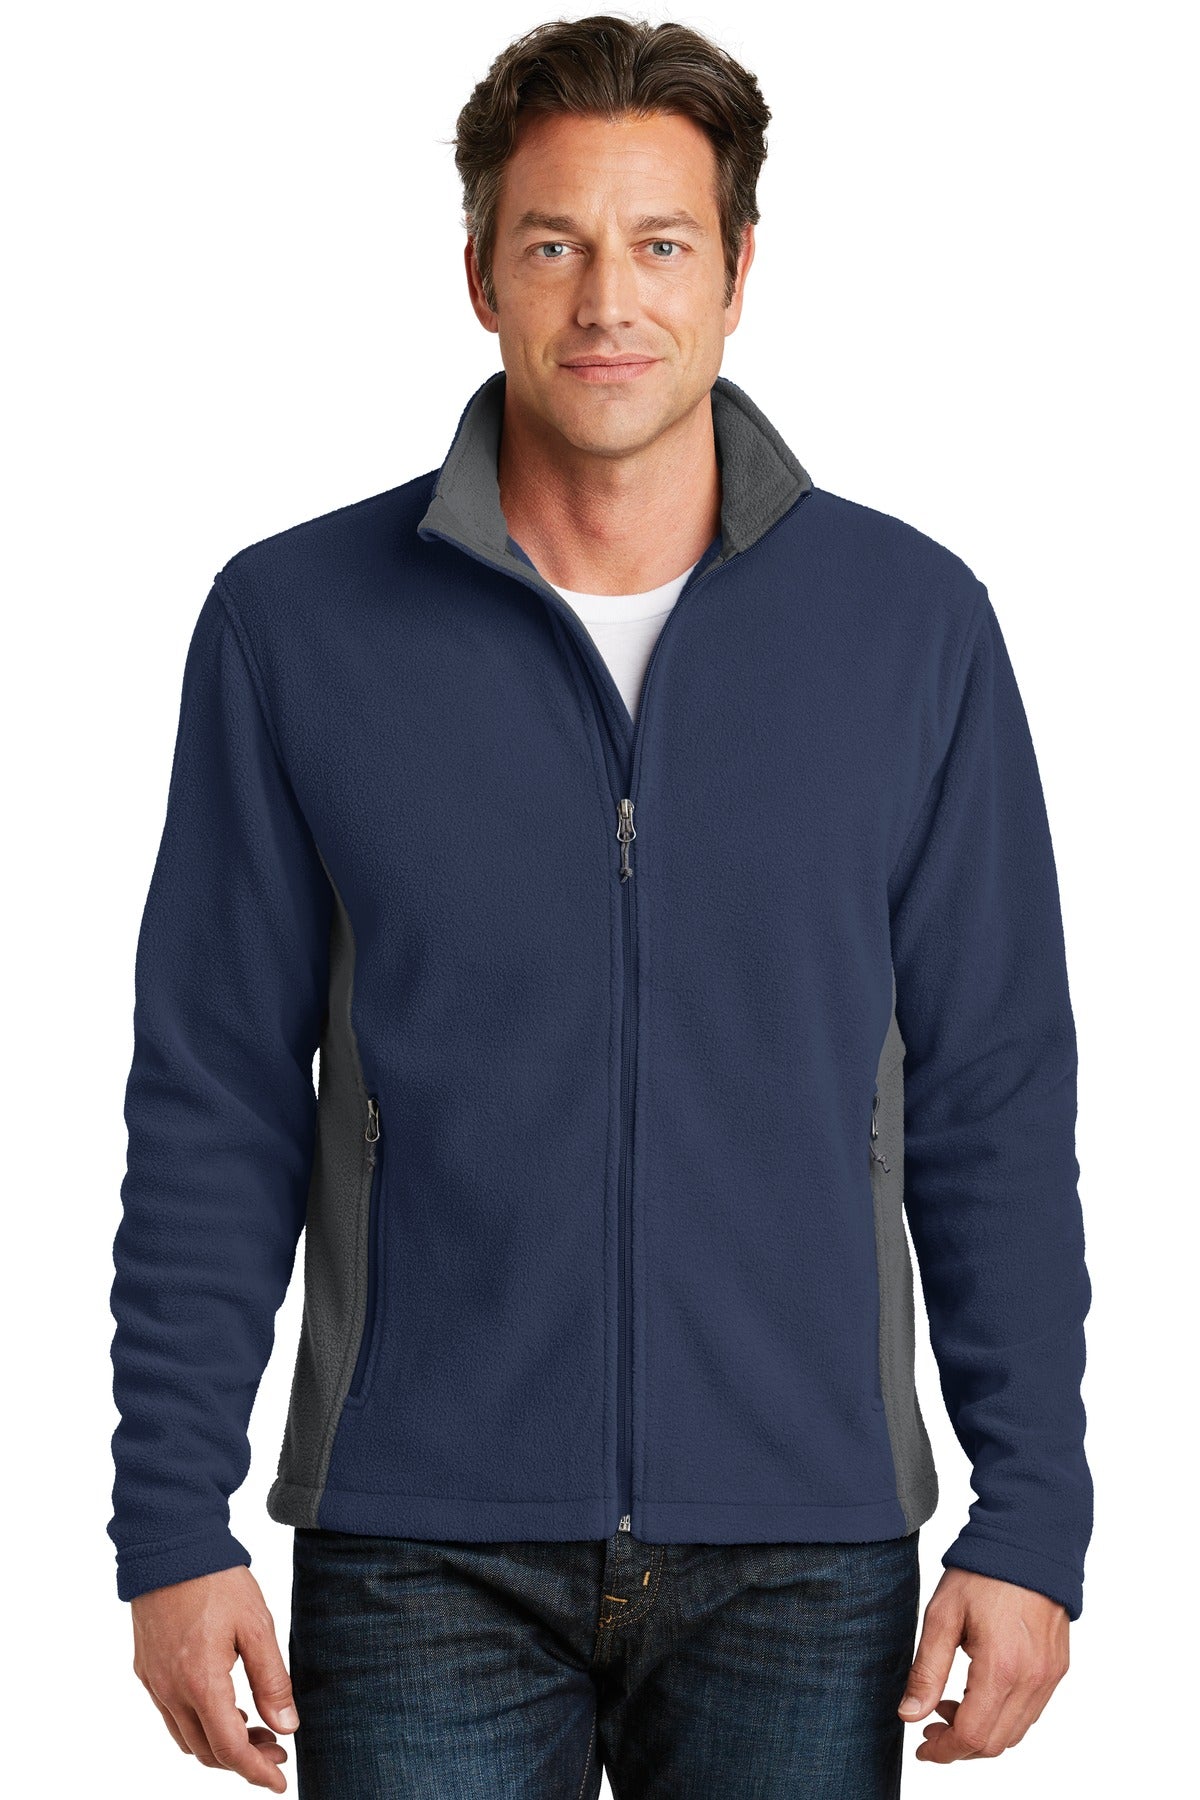 Port Authority Colorblock Value Fleece Jacket. F216